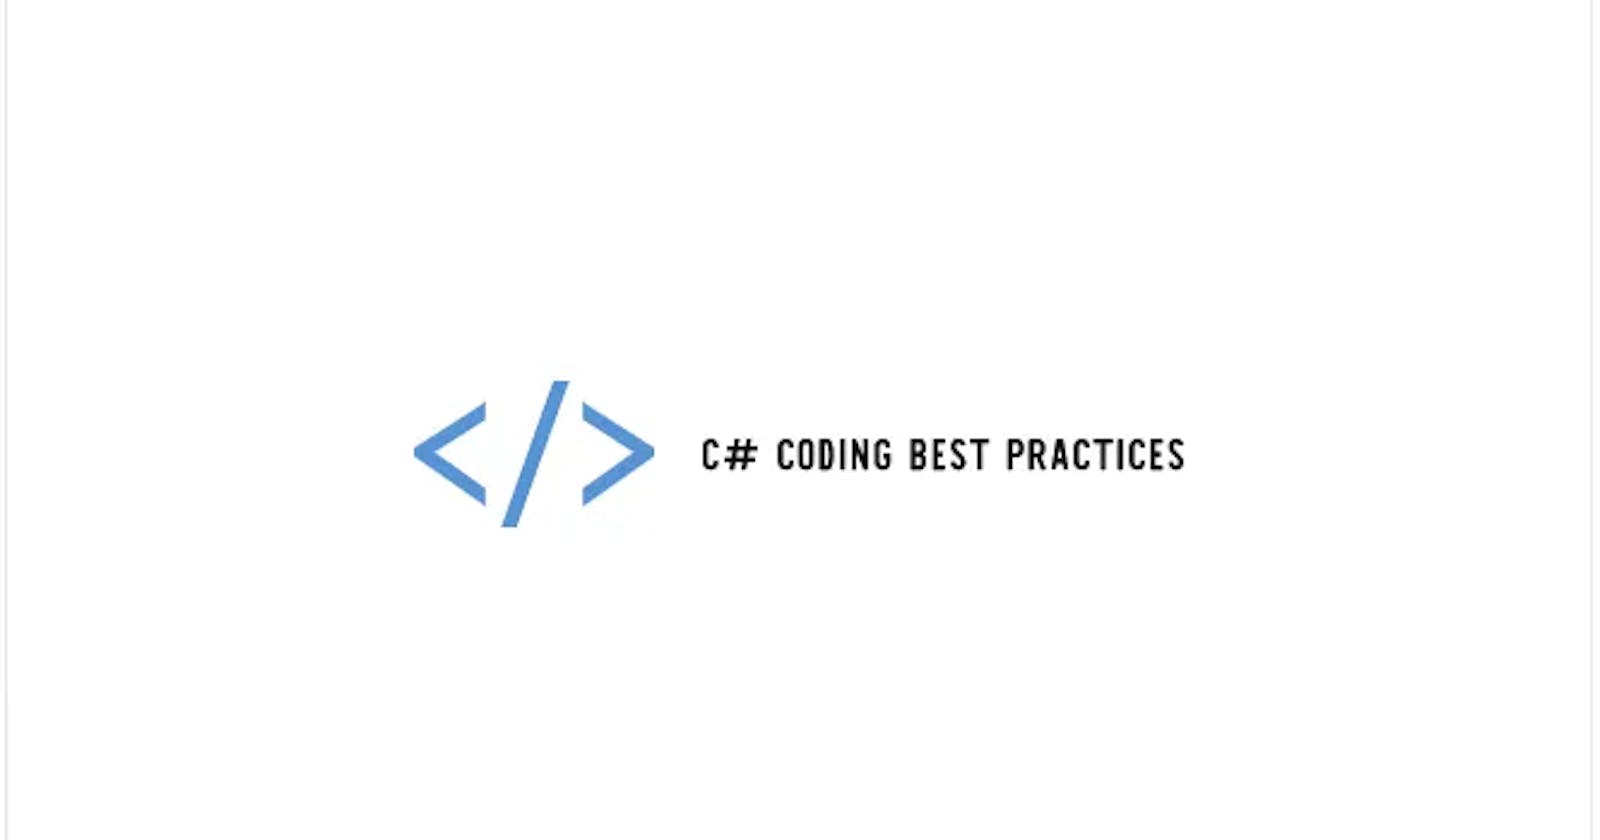 C# Coding Best Practices